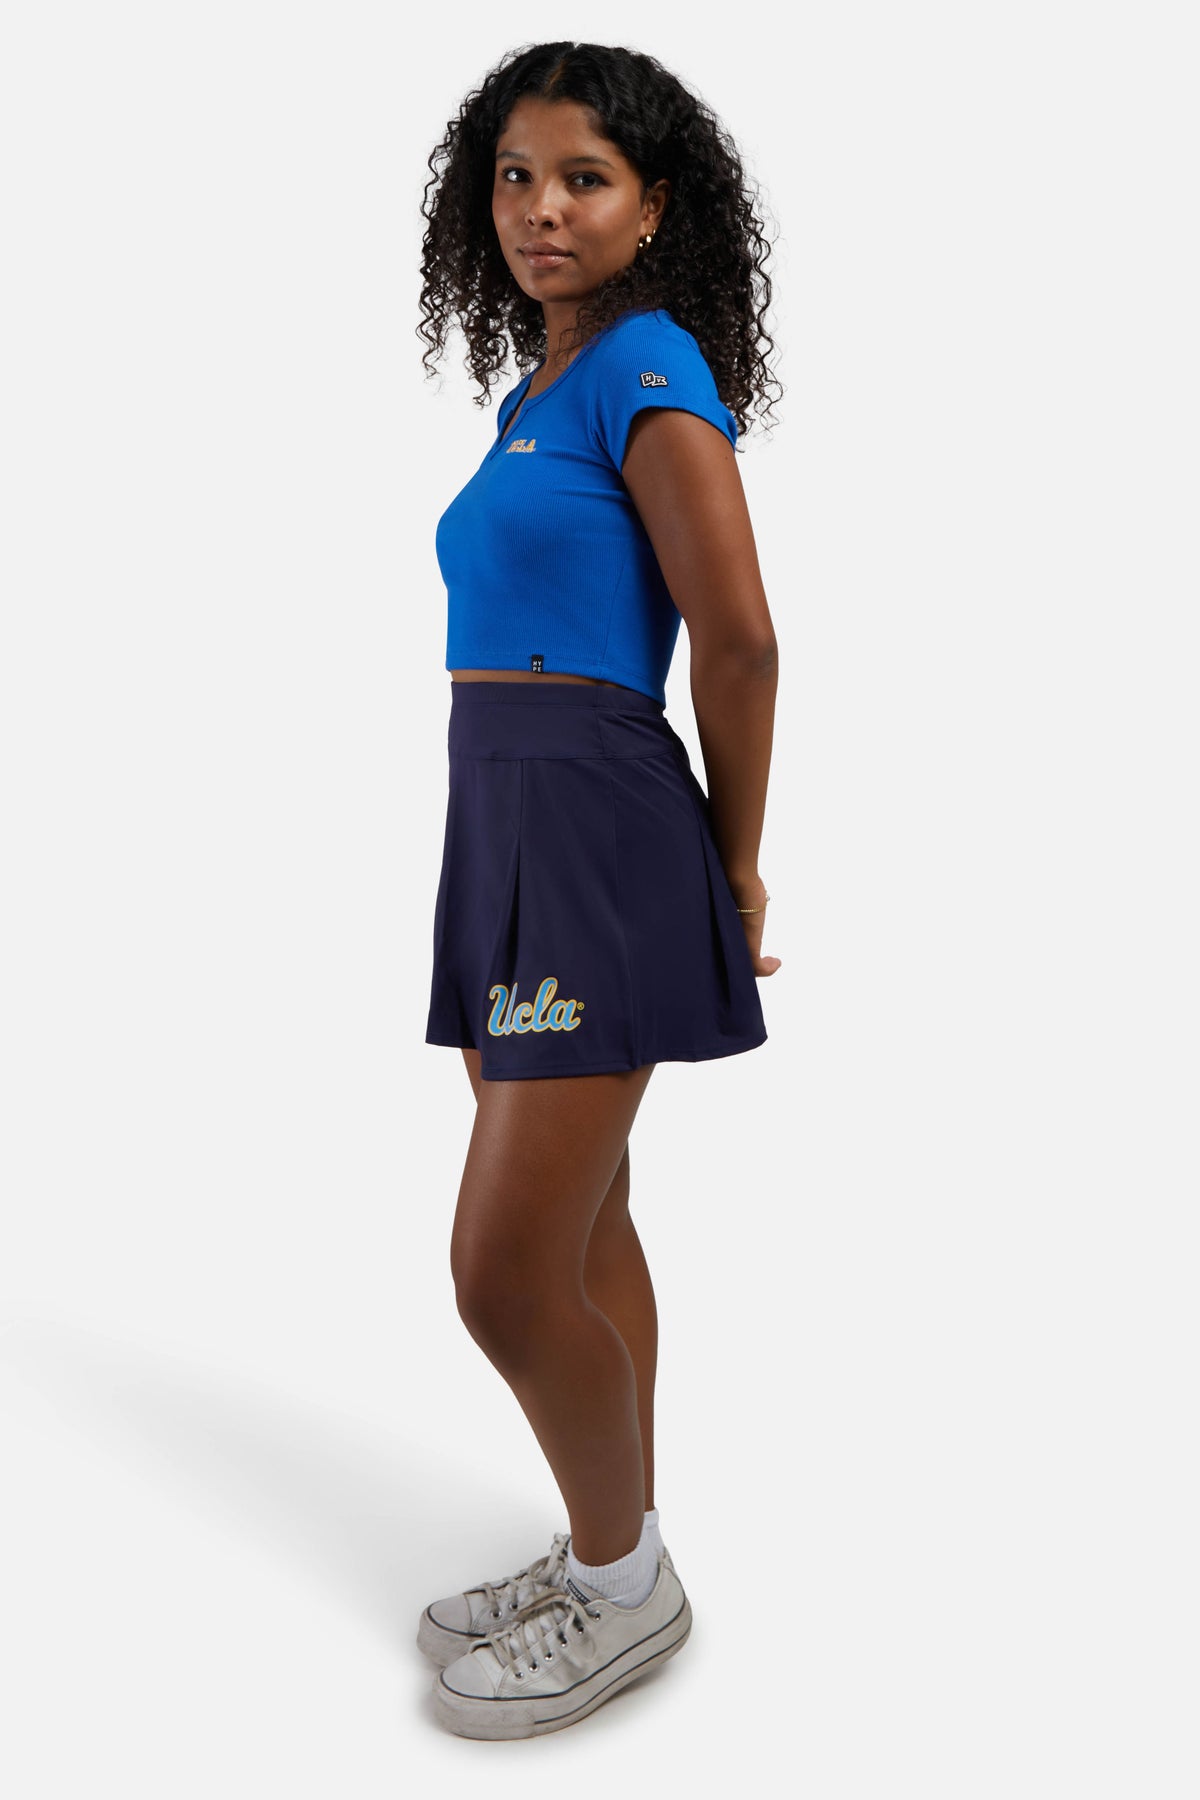 UCLA Athletic Skirt